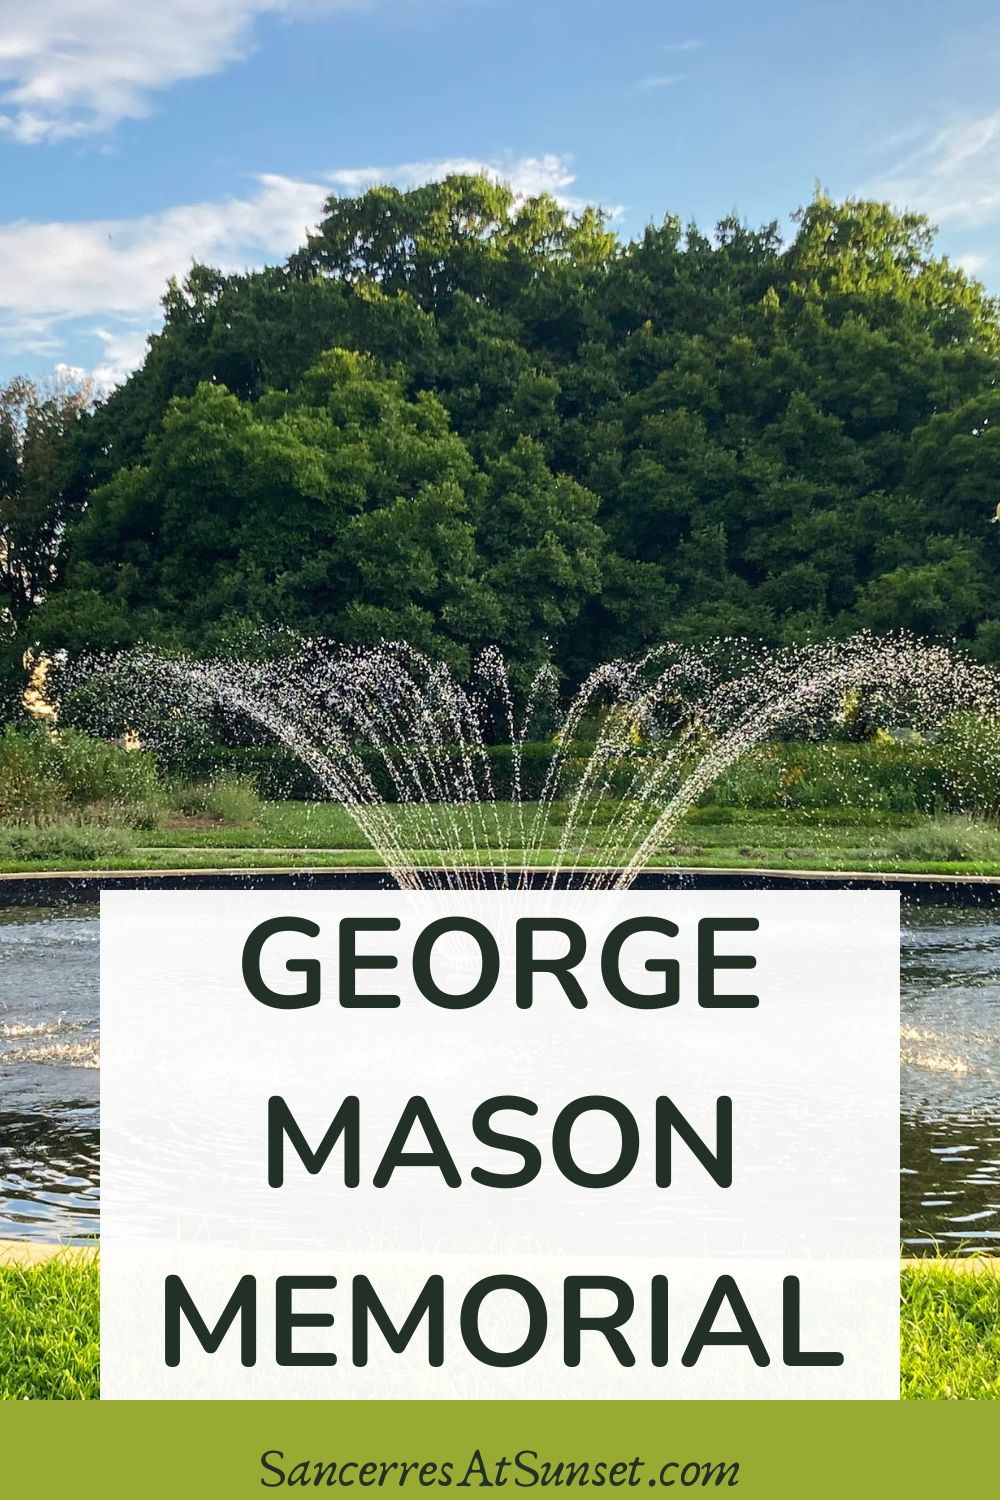 George Mason Memorial in Washington, D.C.